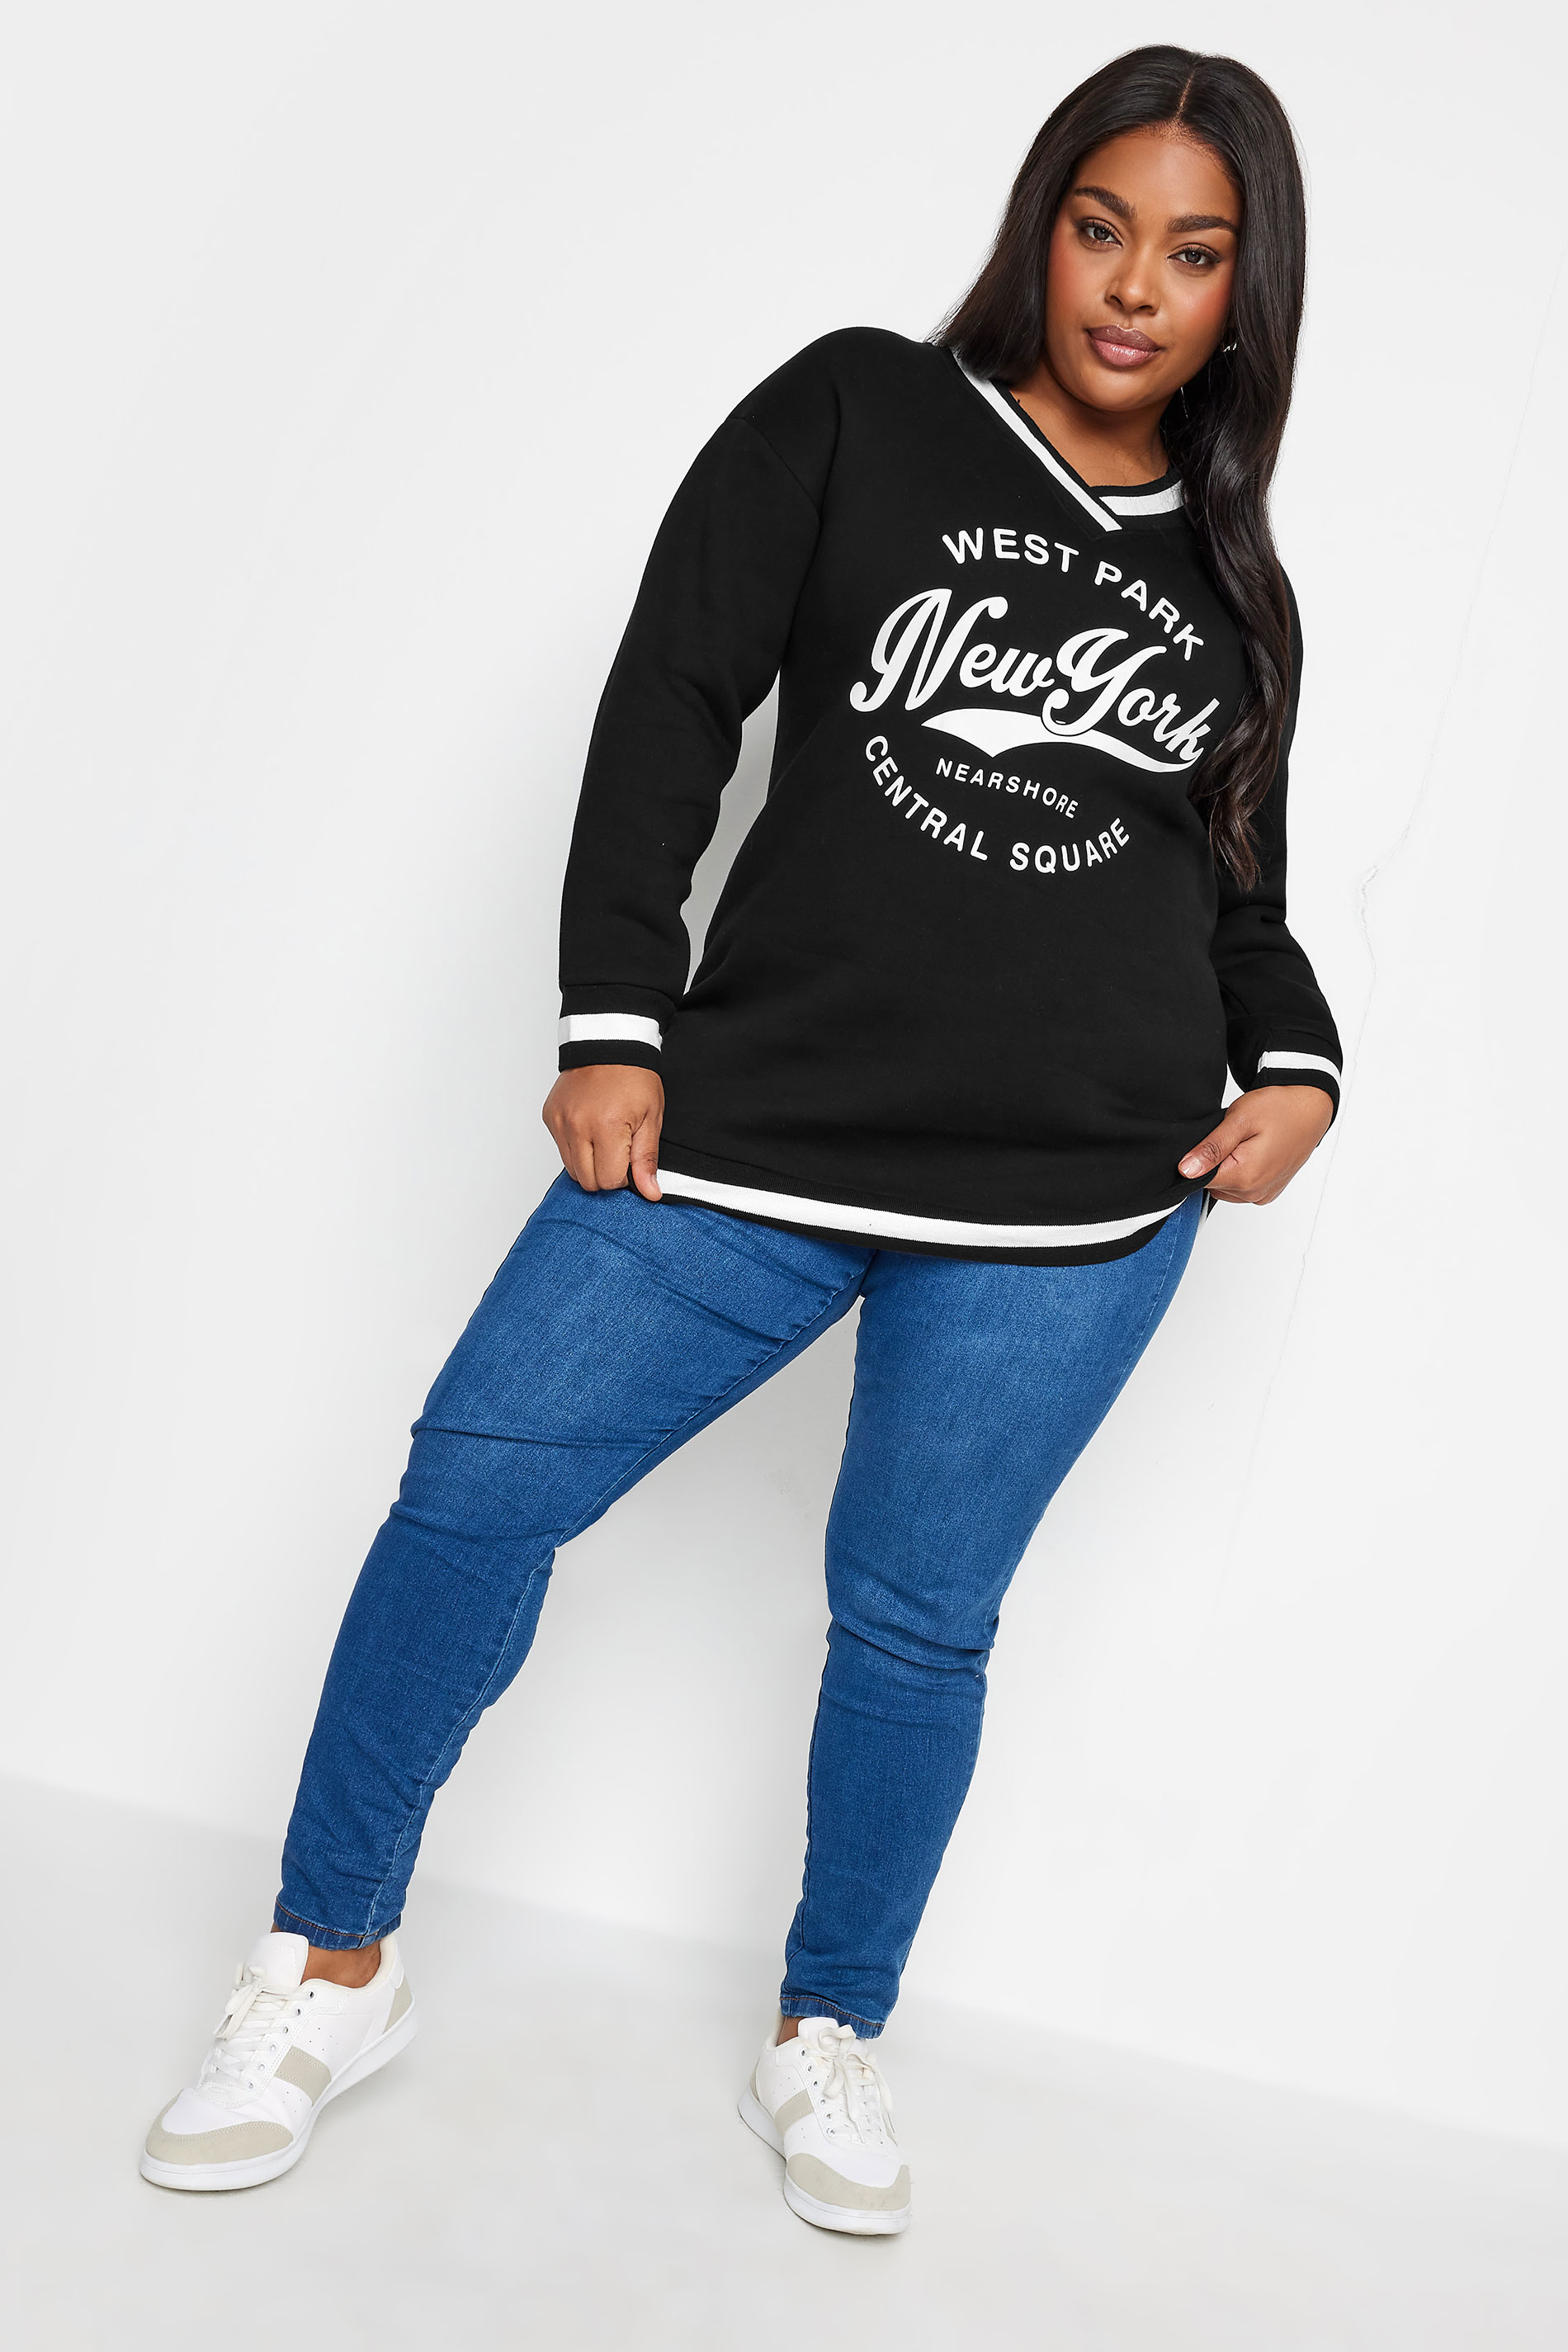 YOURS Plus Size Black 'New York' Slogan Sweatshirt | Yours Clothing 2